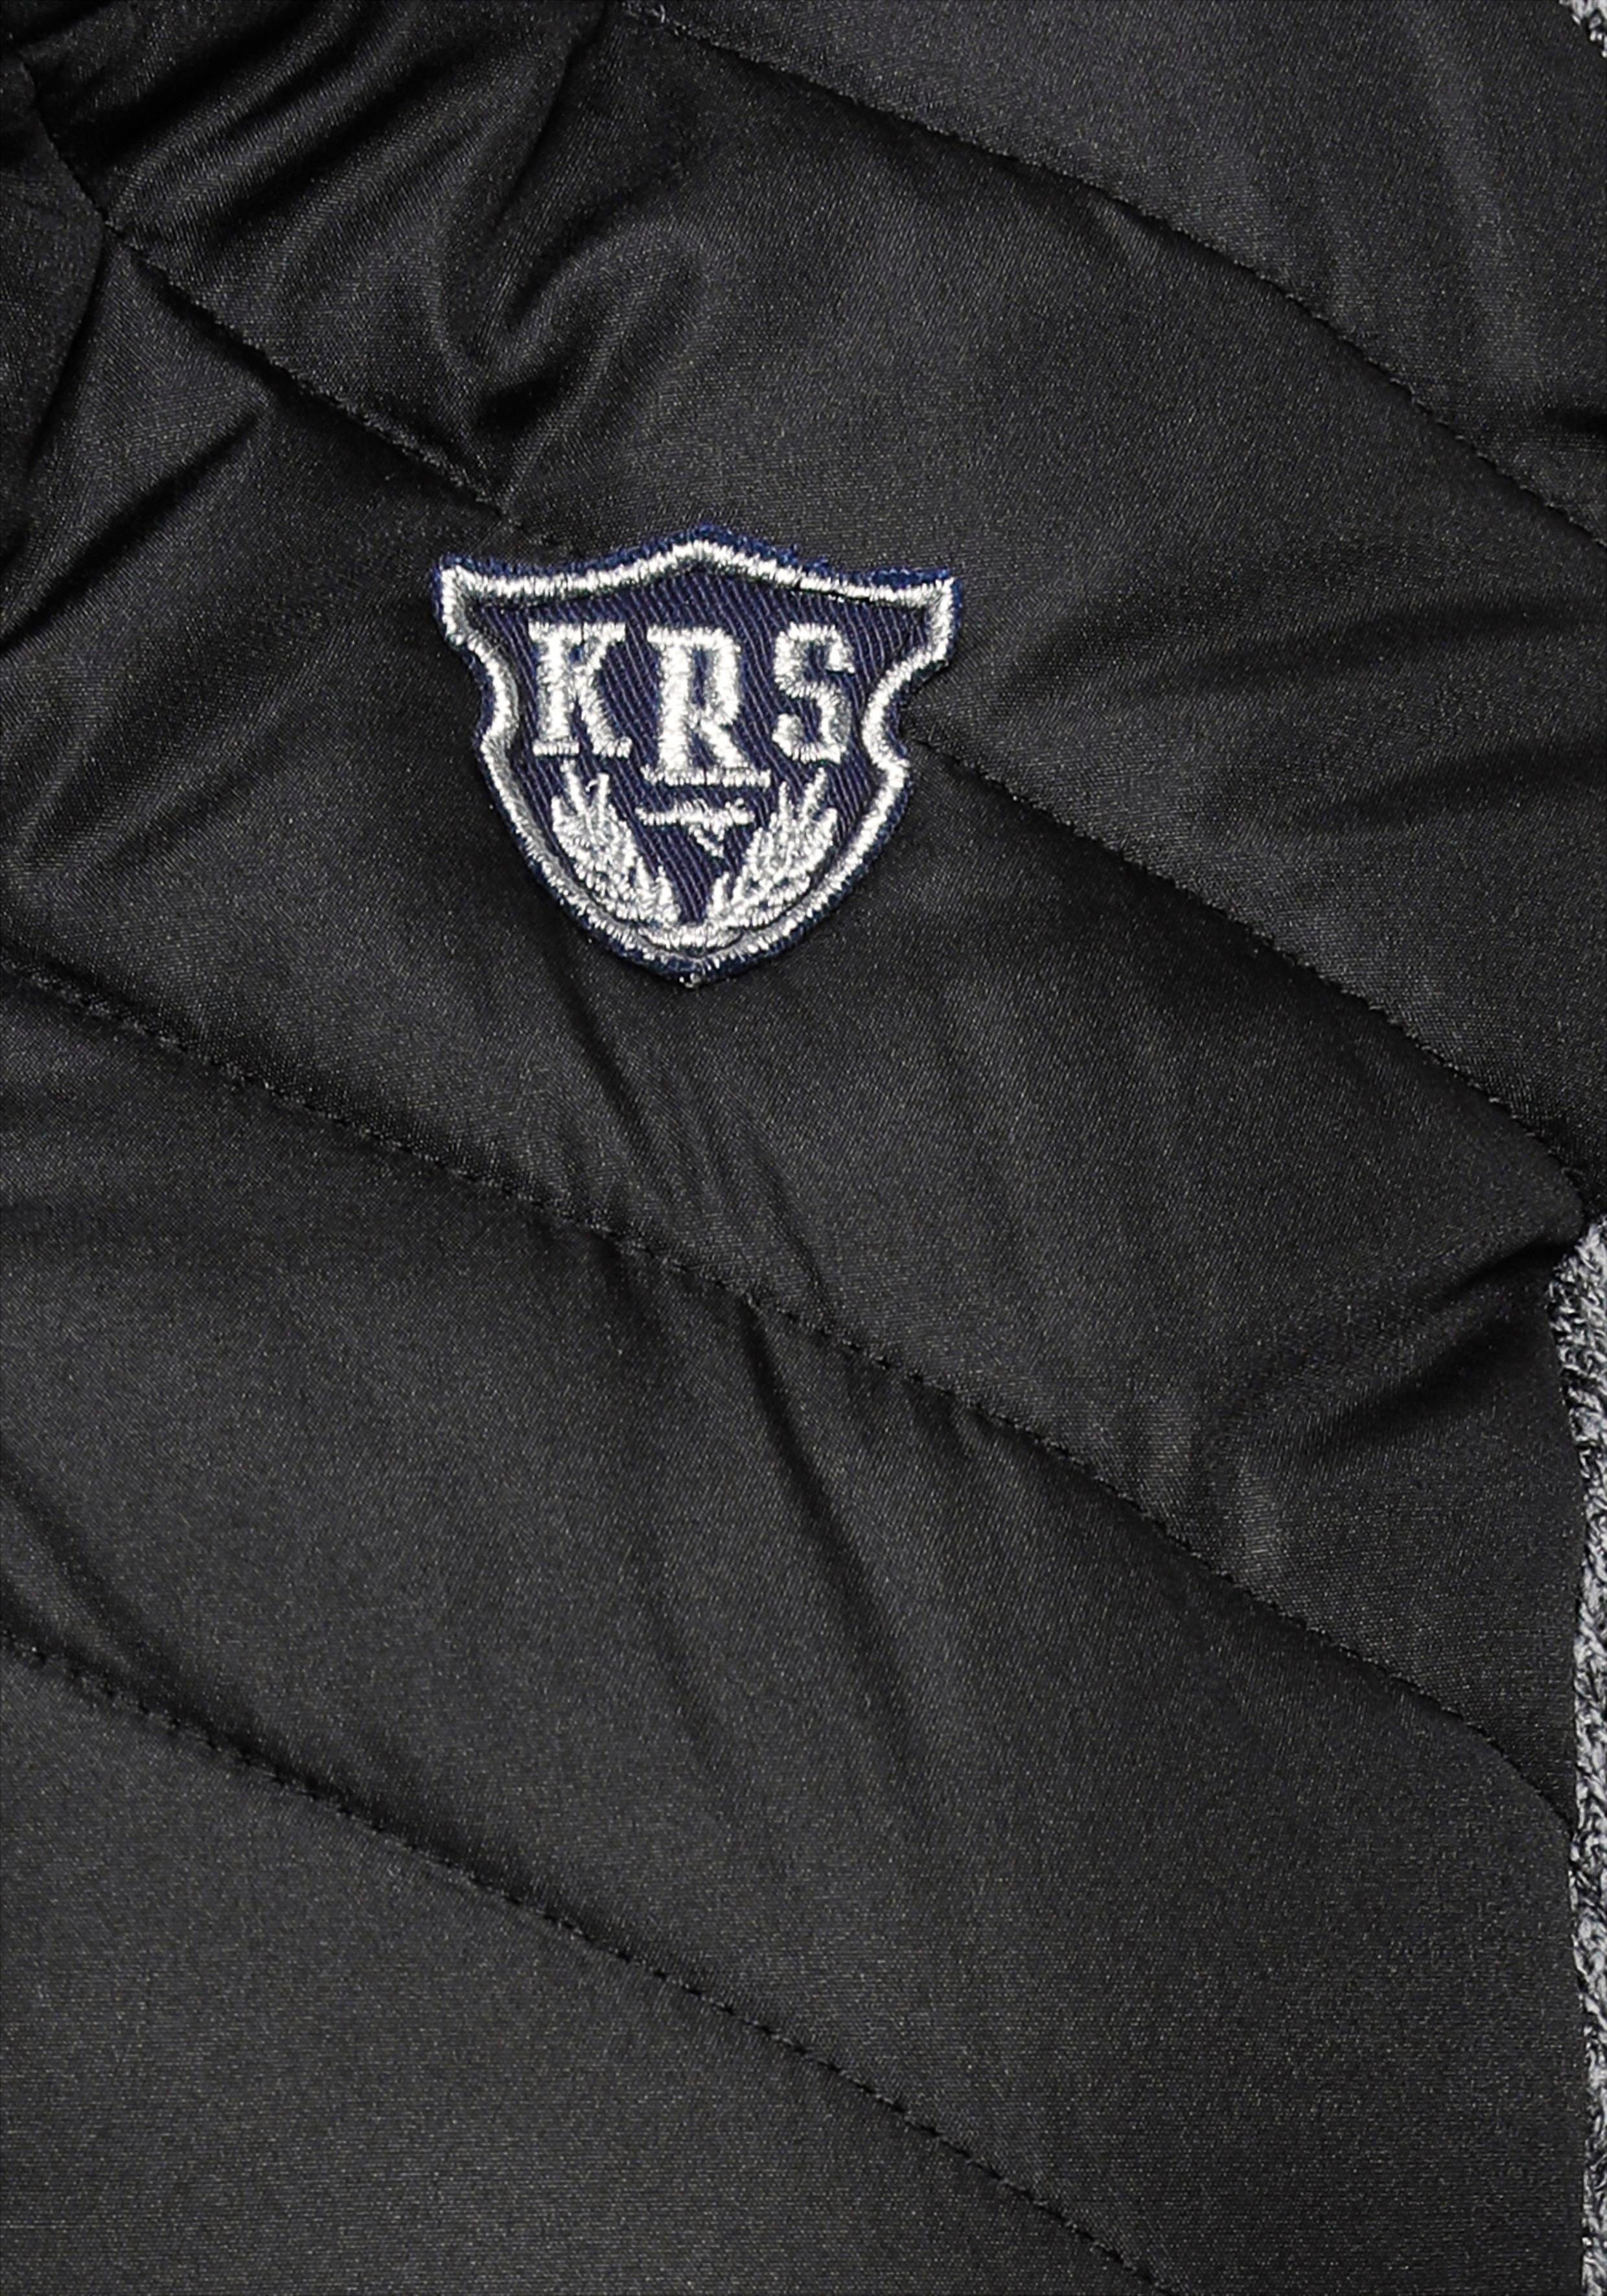 KangaROOS Kurzjacke im trendigen 2-In-1 Look (Jacke aus schwarz nachhaltigem Material)